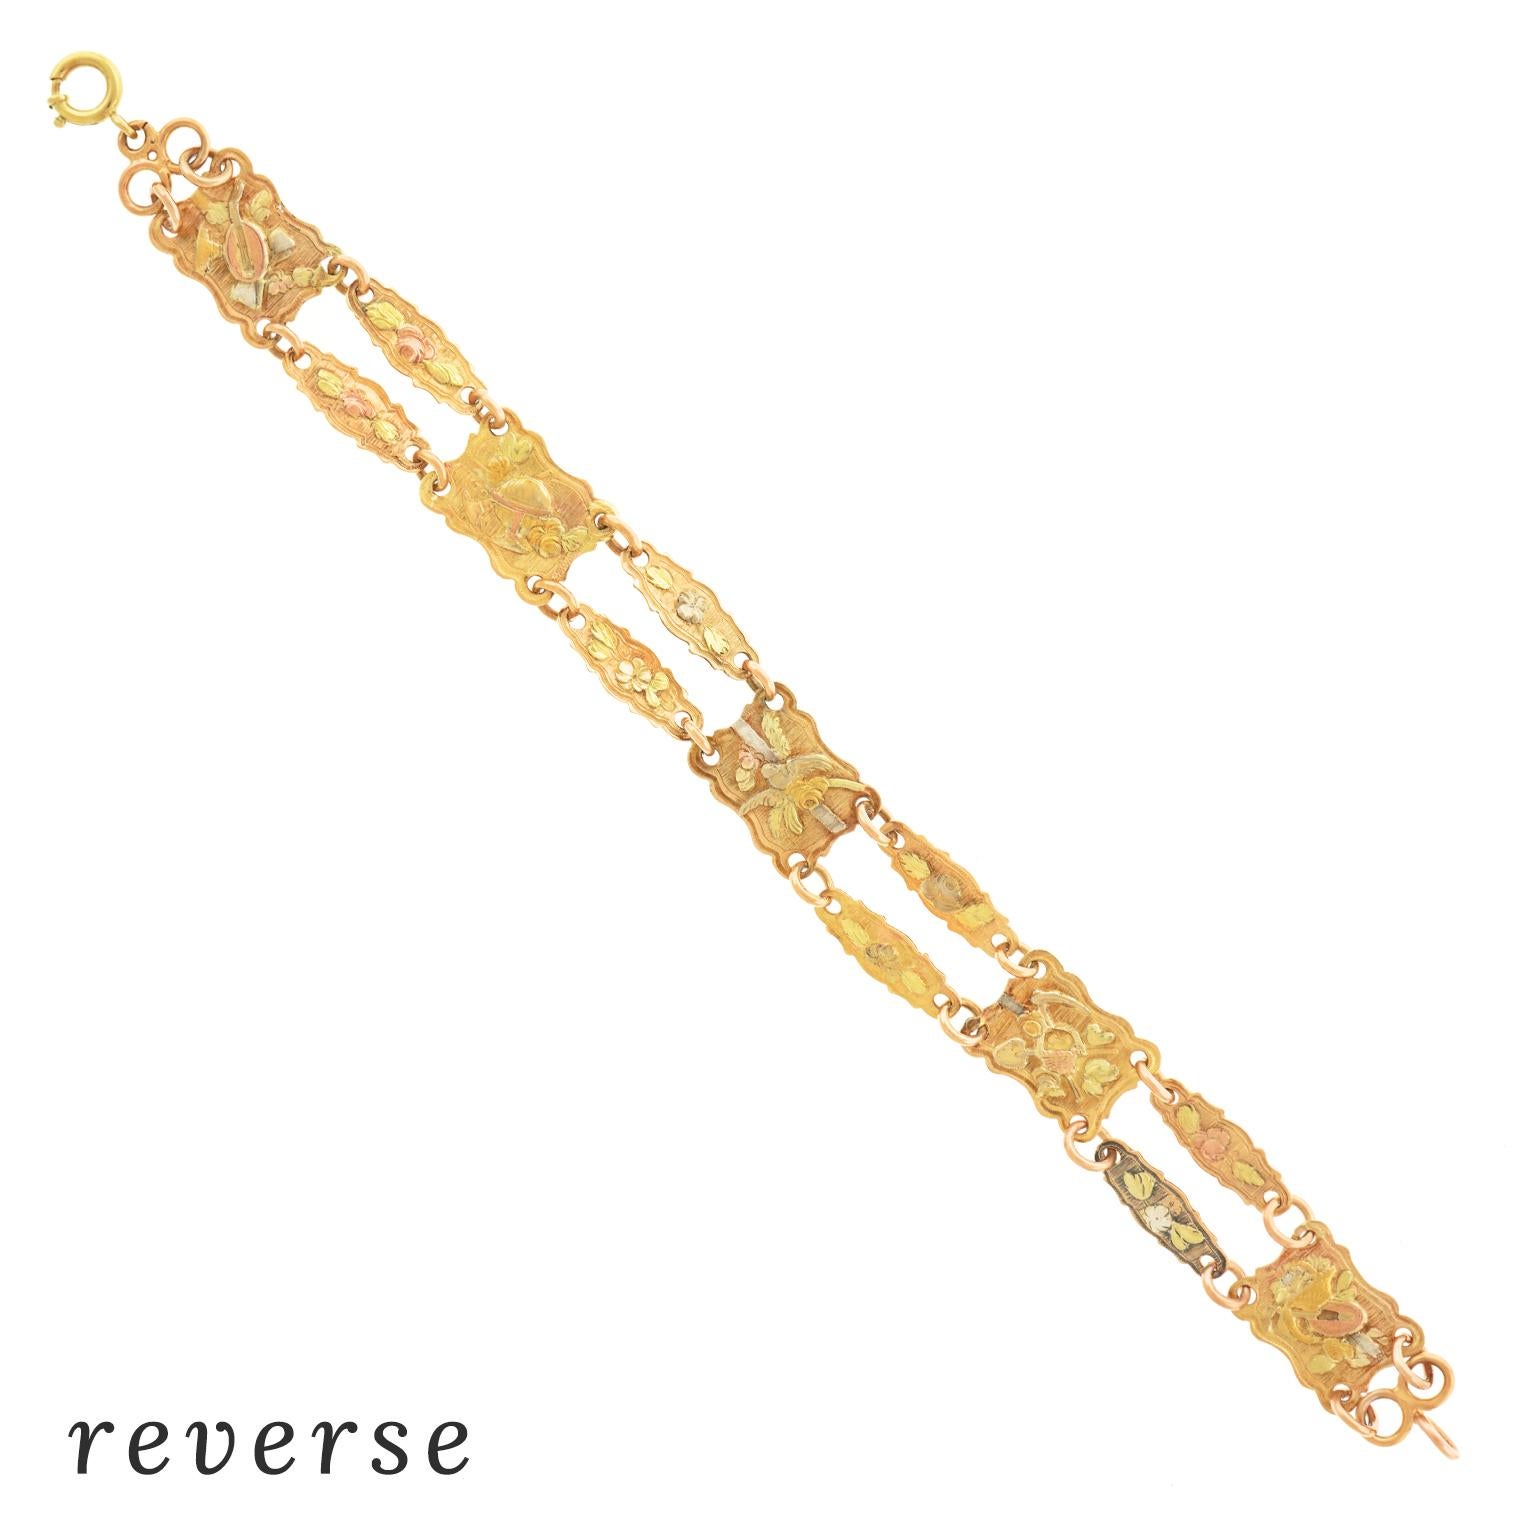 Antique Venetian Gold Bracelet with Spectacular Charm 3